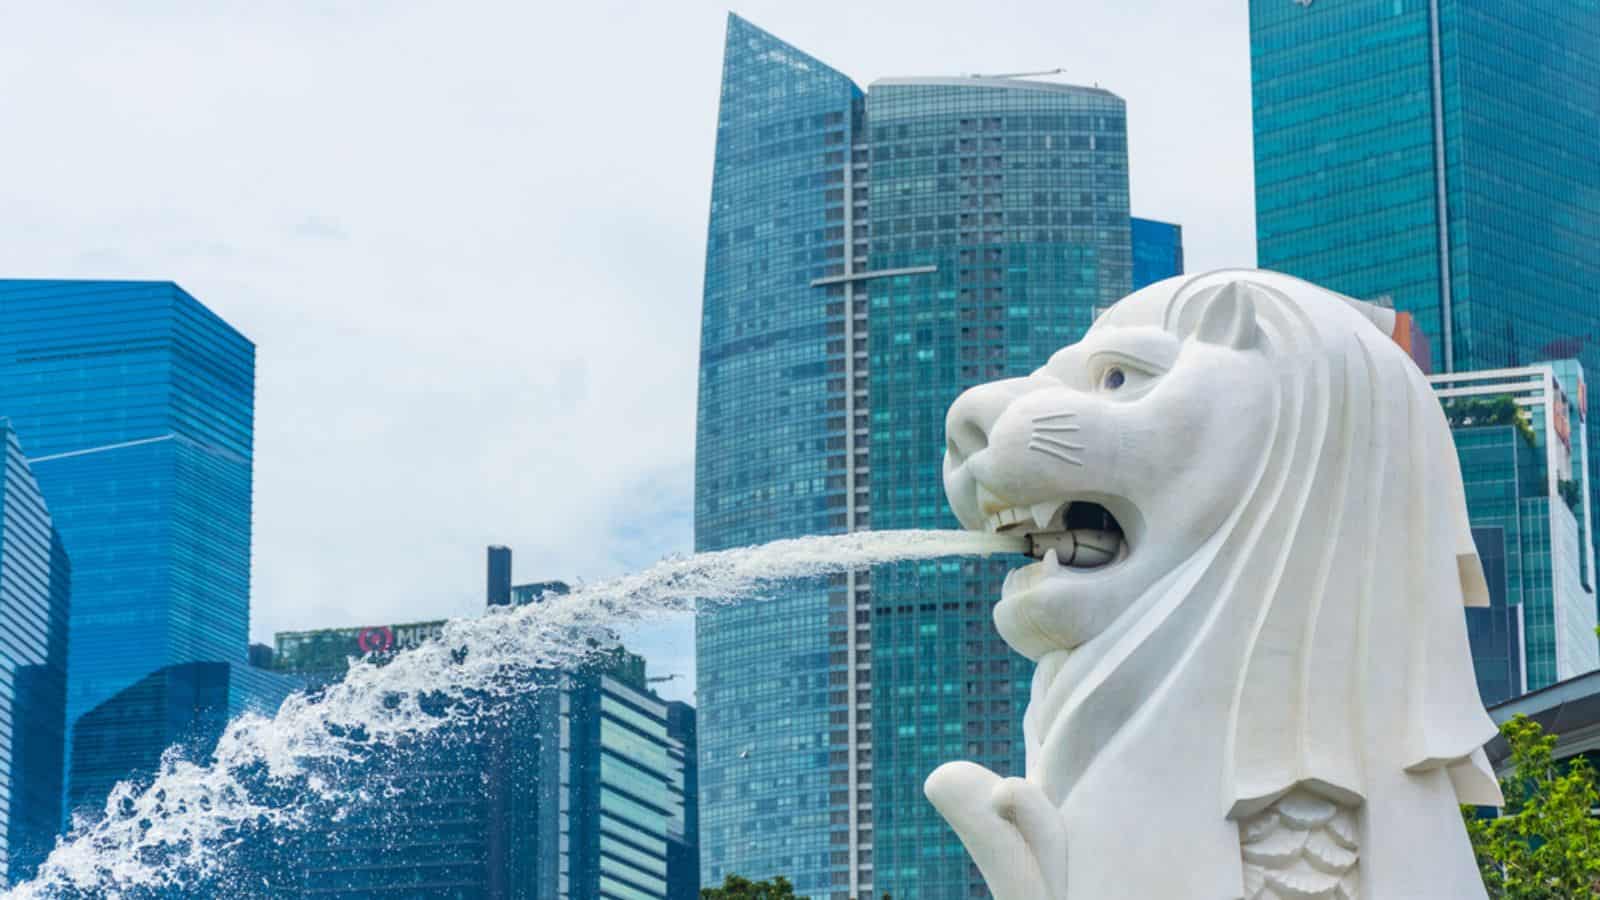 The Merlion symbol of Singapore